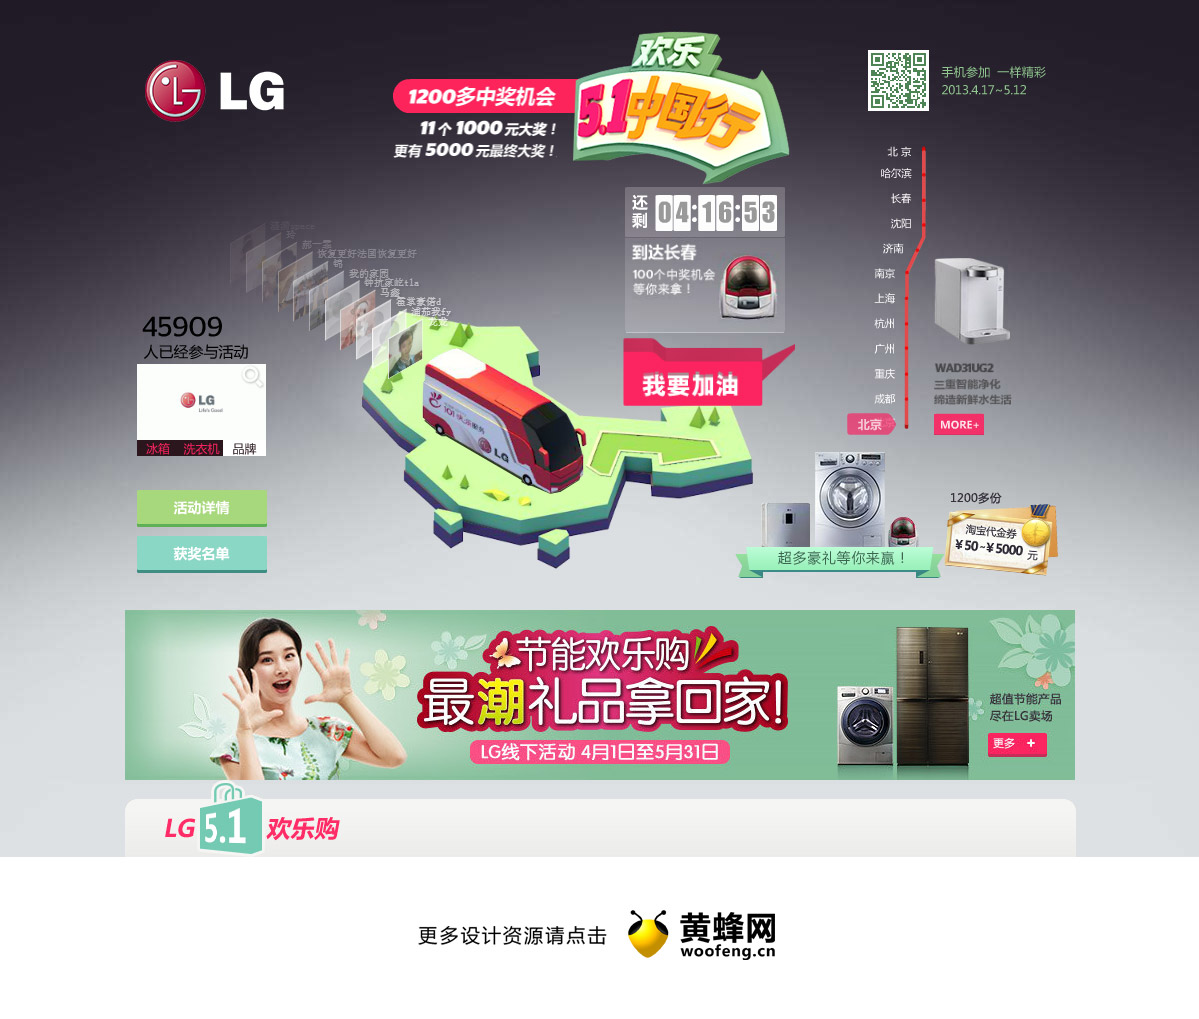 LG 五一欢乐中国行活动专题网页，来源自黄蜂网https://woofeng.cn/web/